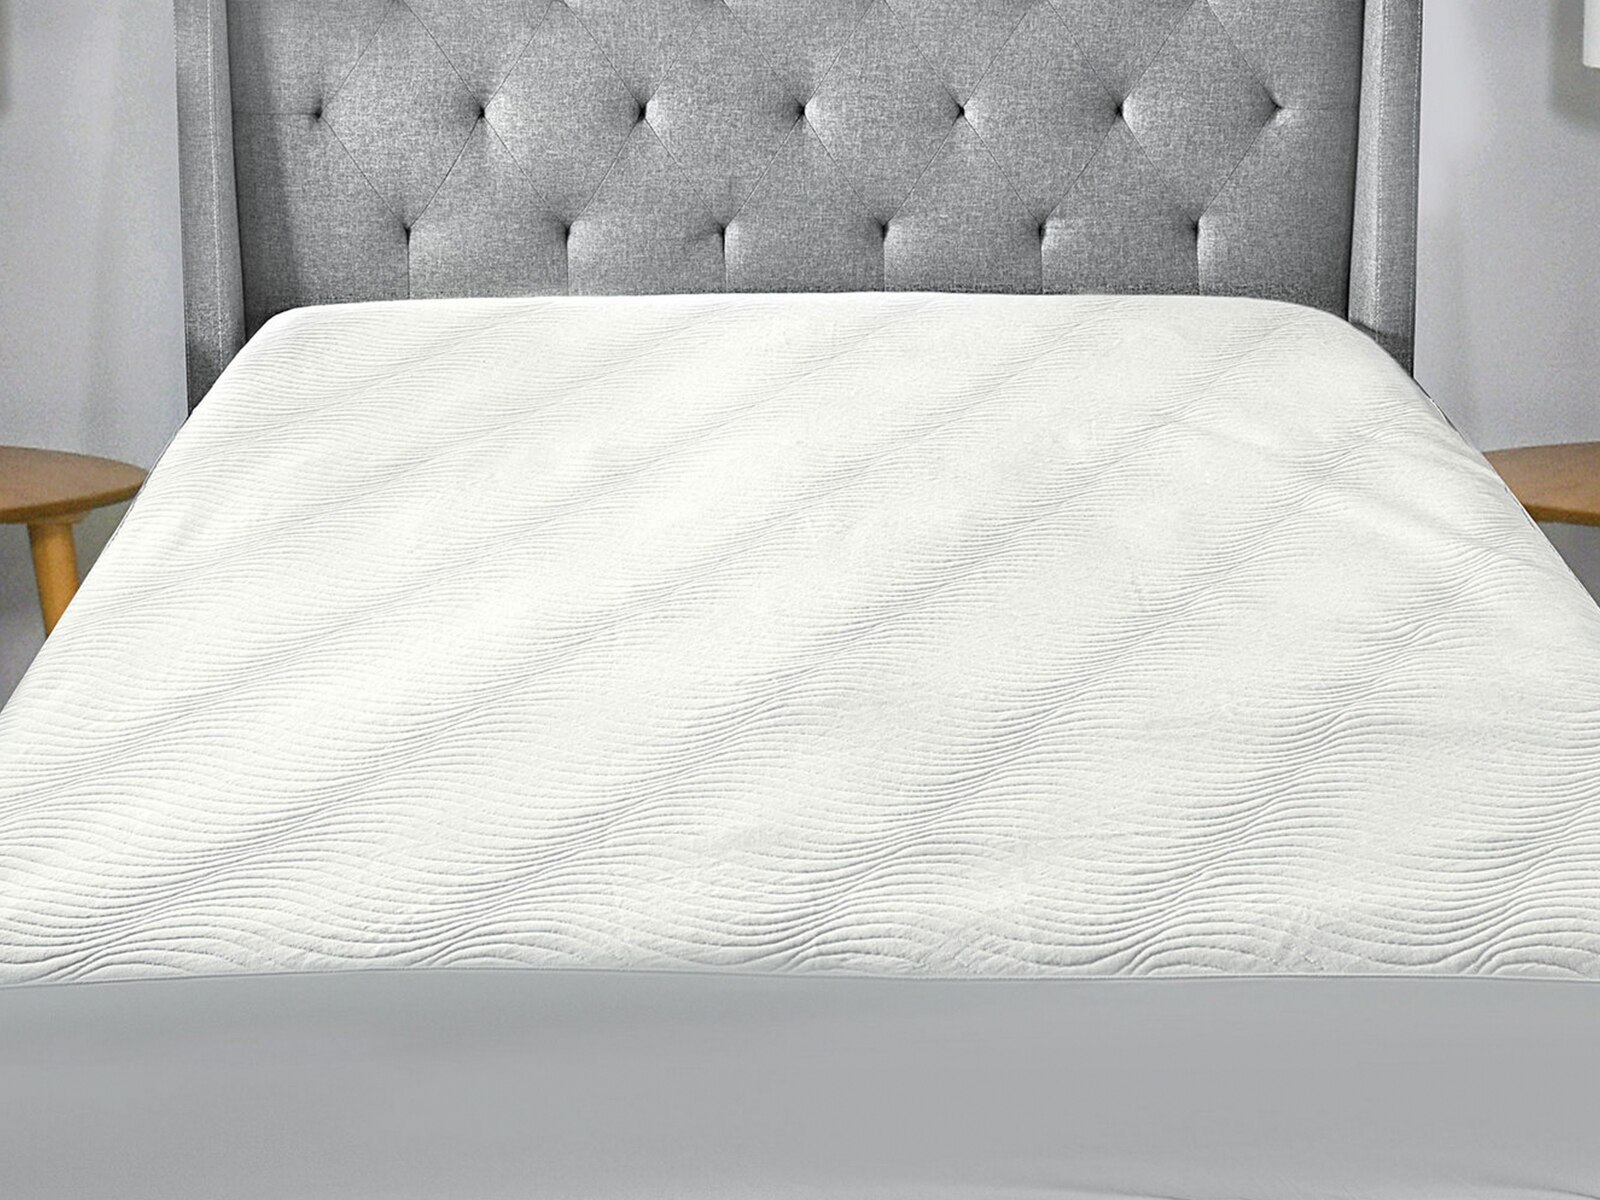 spring air comfort knit mattress protector reviews